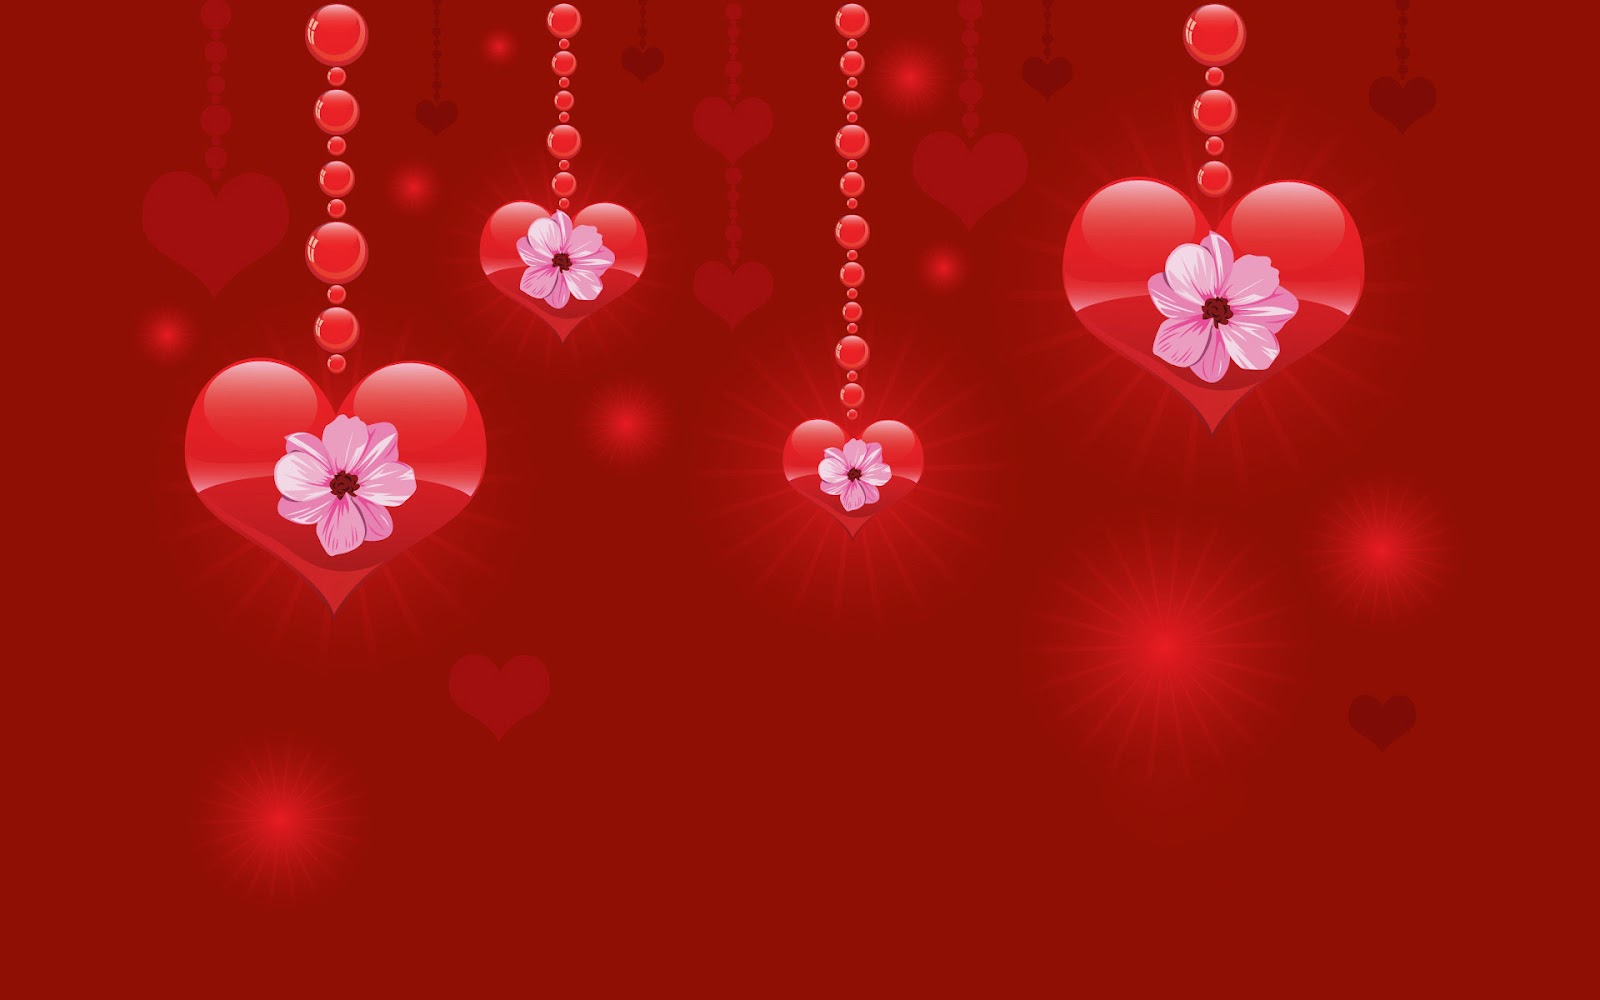 Valentines Day Wallpapers ImageBankbiz